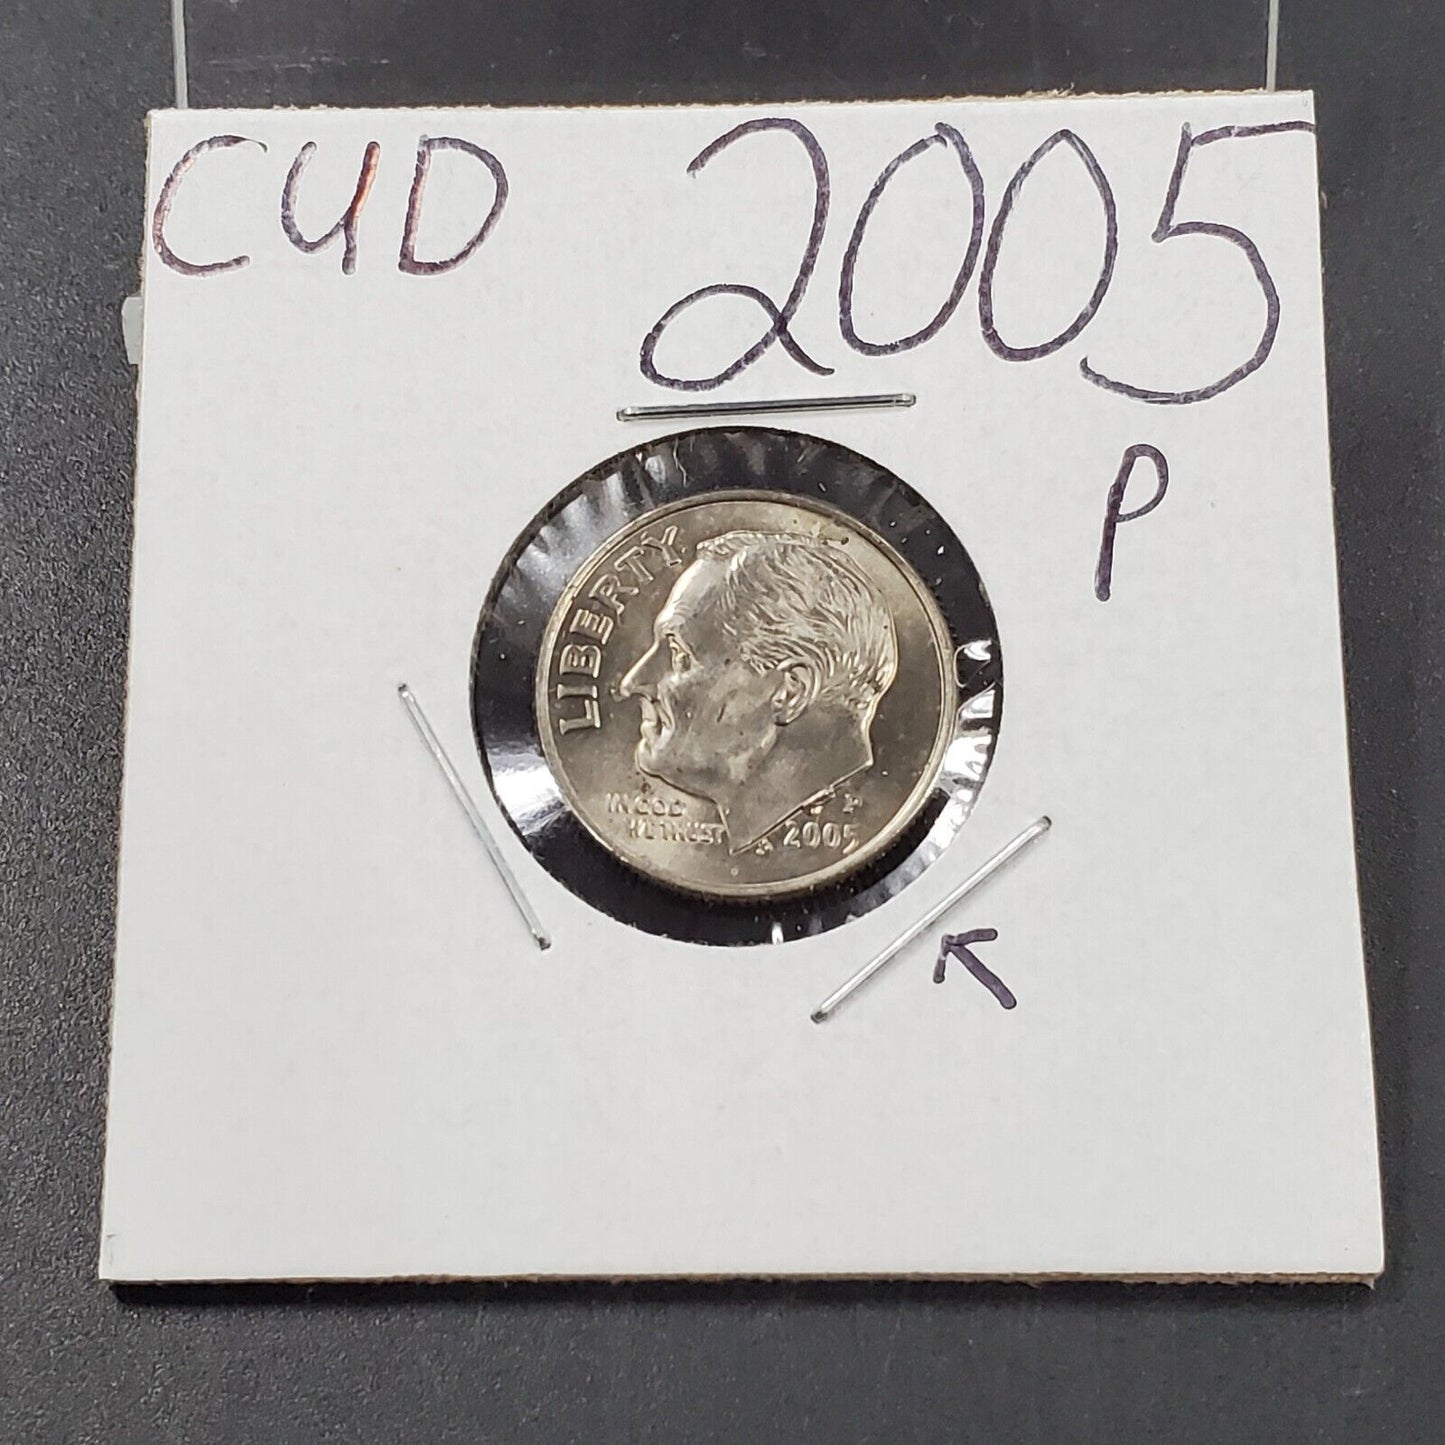 2005 P Roosevelt Dime Coin CUD Die Creak BU UNC